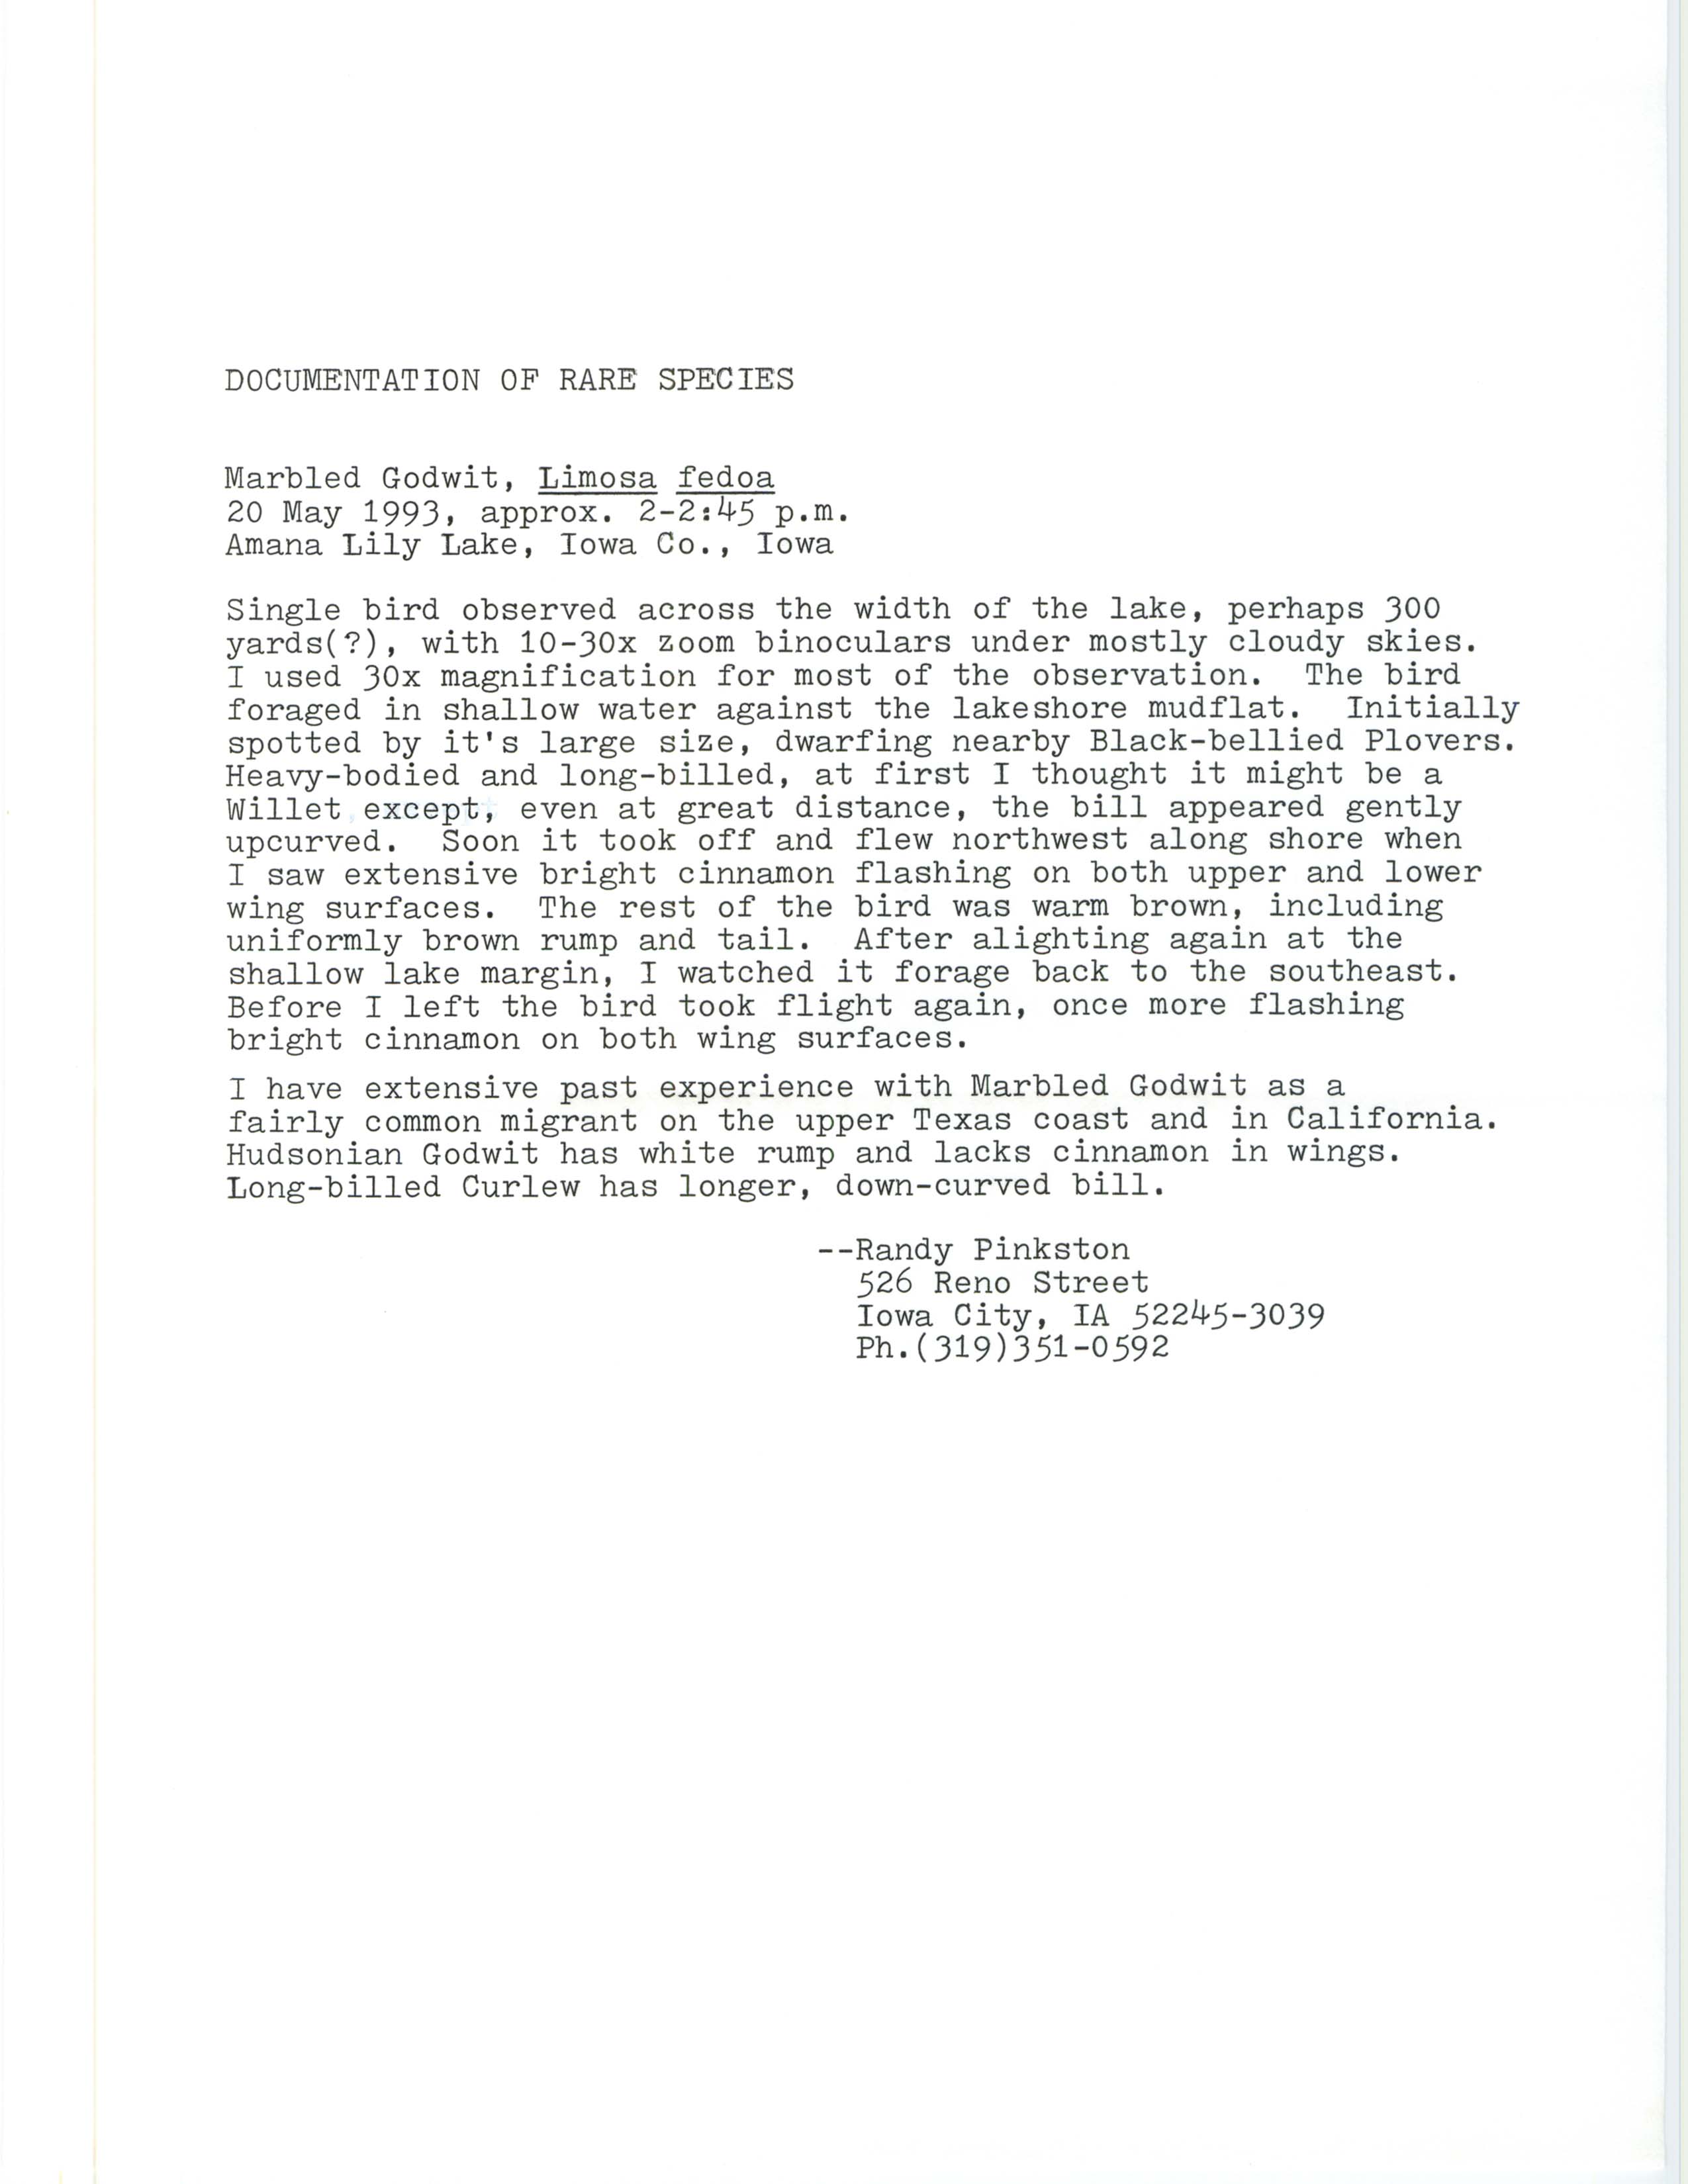 Rare bird documentation form for Marbled Godwit at Amana Lily Lake, 1993